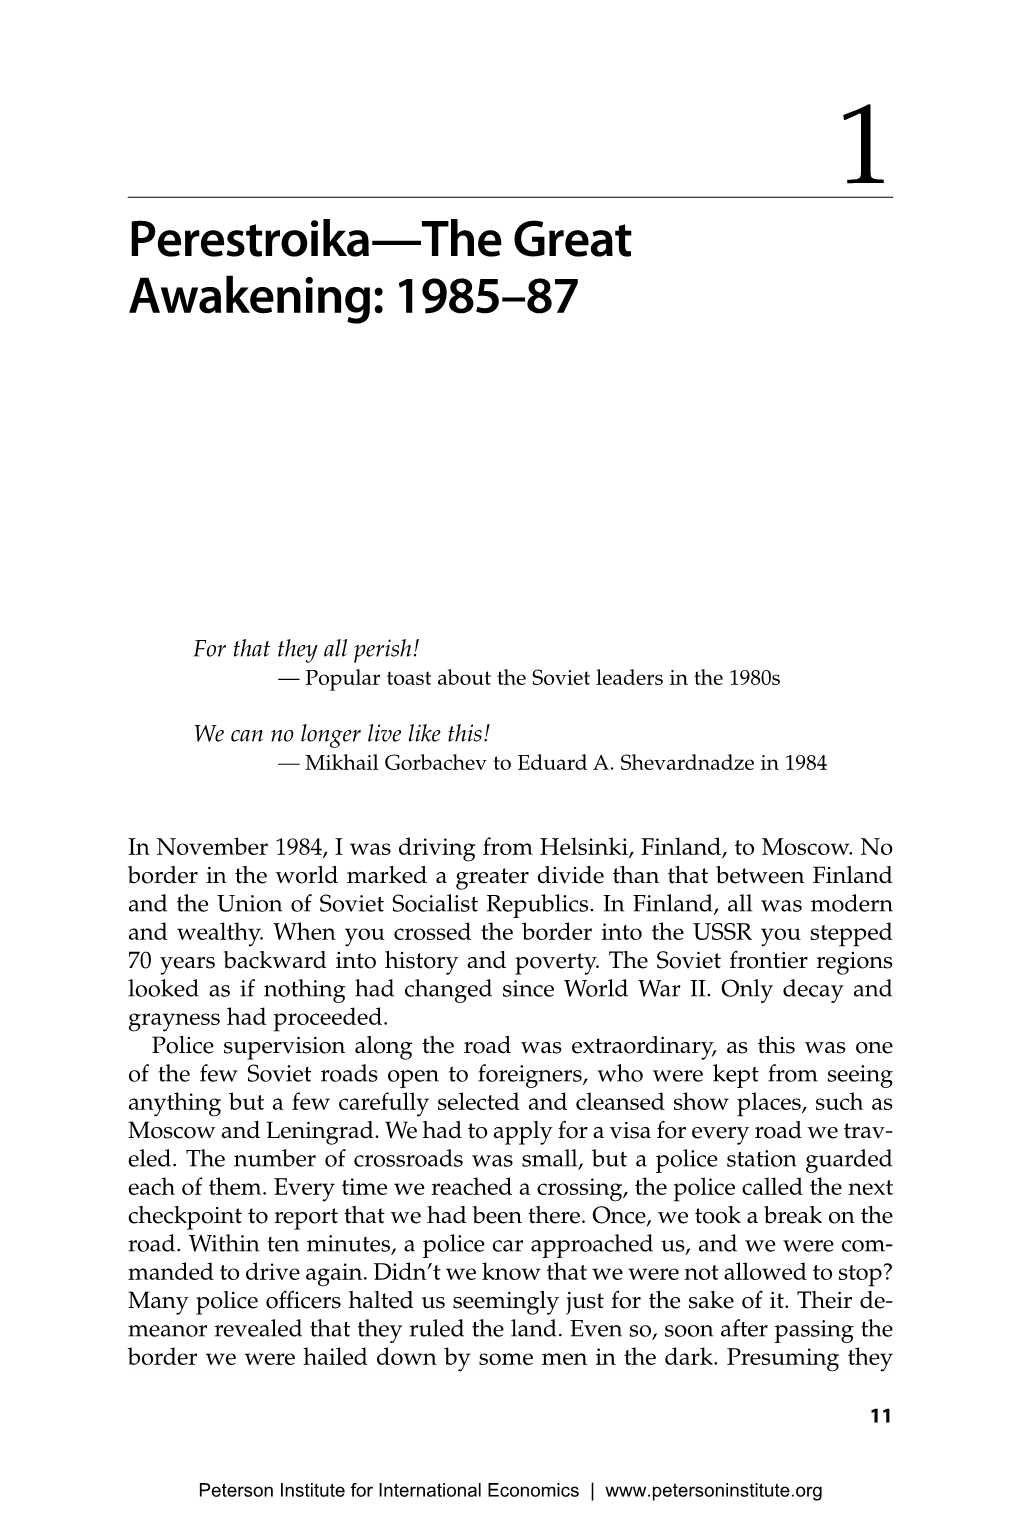 Perestroika--The Great Awakening: 1985-87